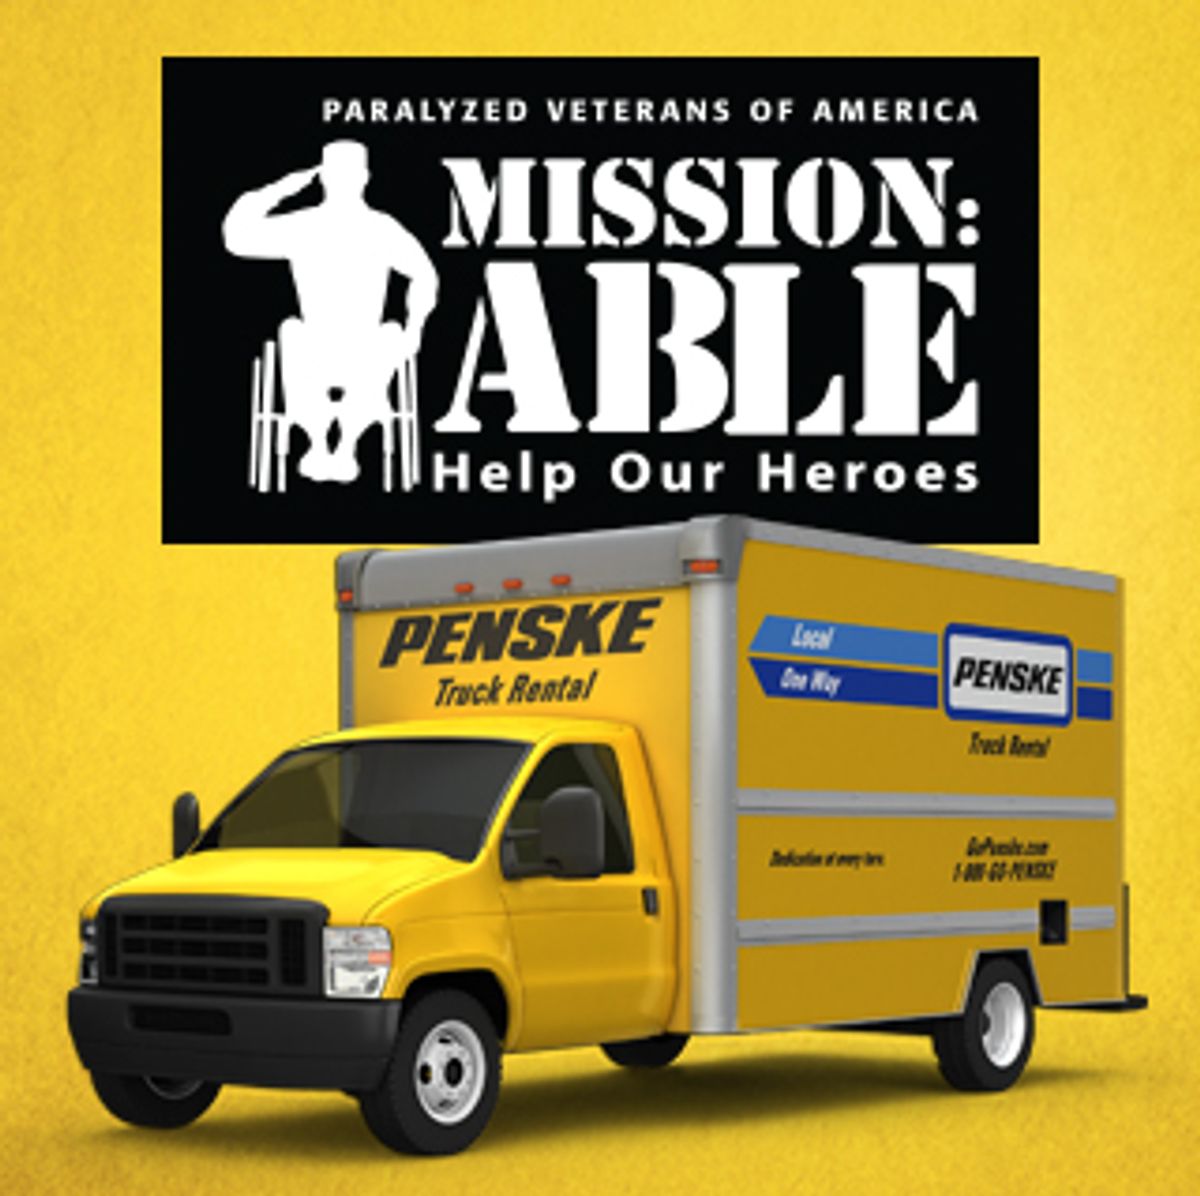 Penske Kicks-Off Paralyzed Veterans of America Fundraising Effort